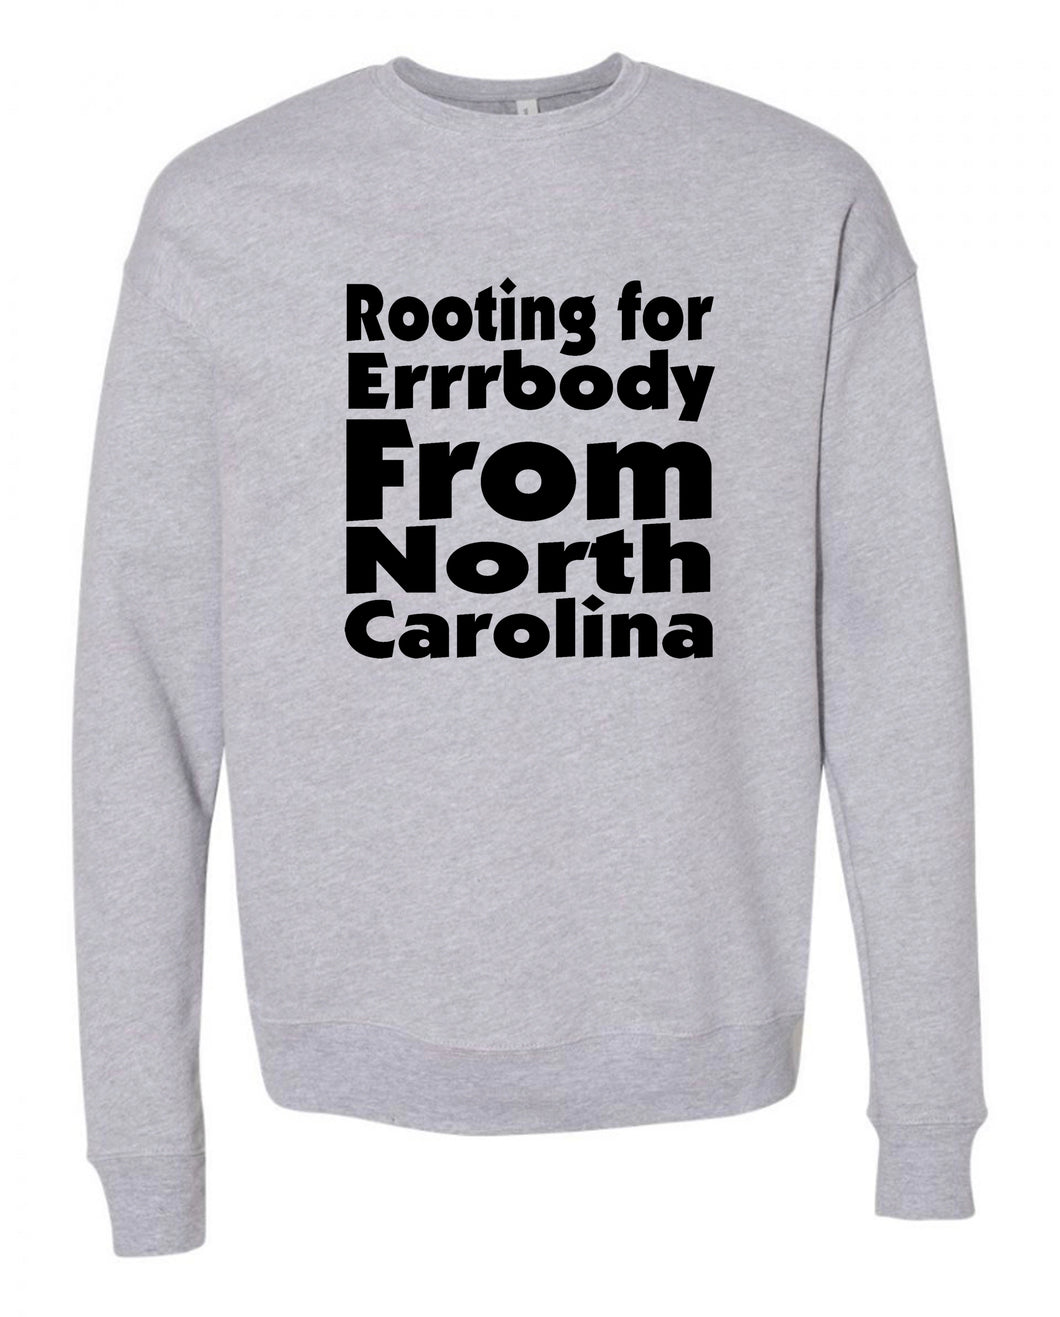 Rooting for North Carolina Crewneck